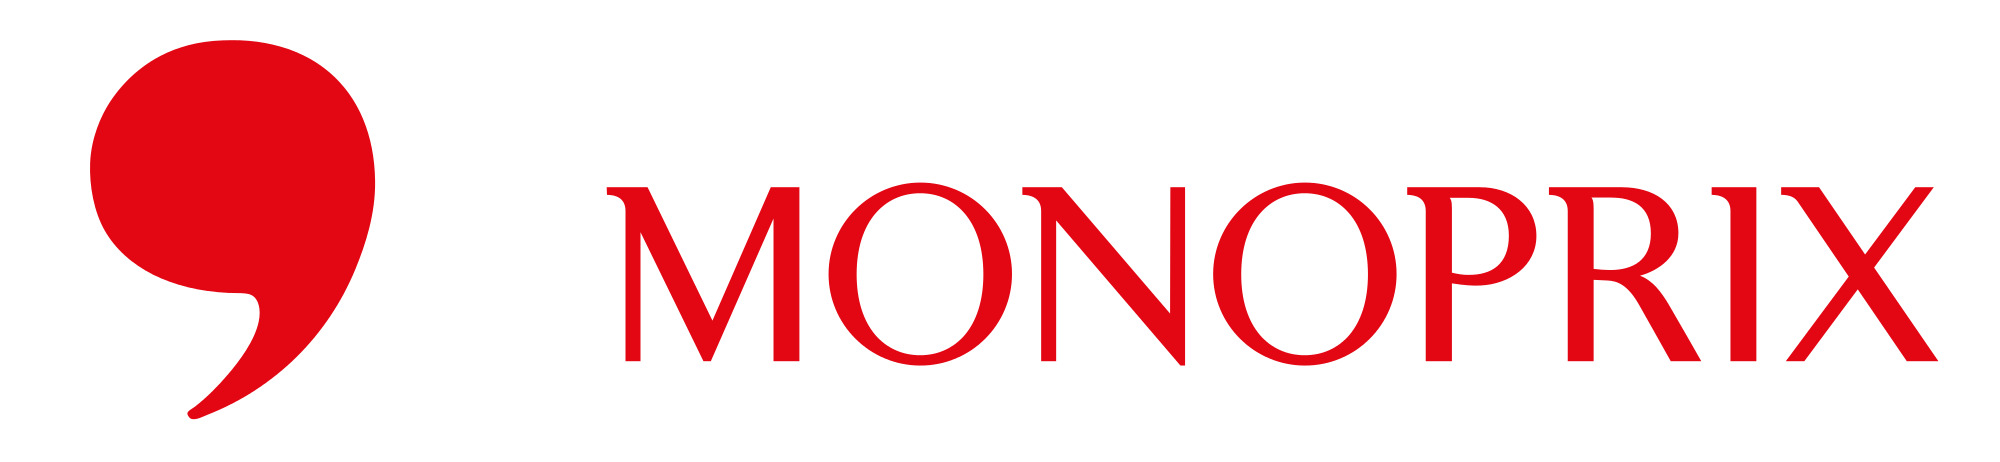 Monoprix Logo png icons